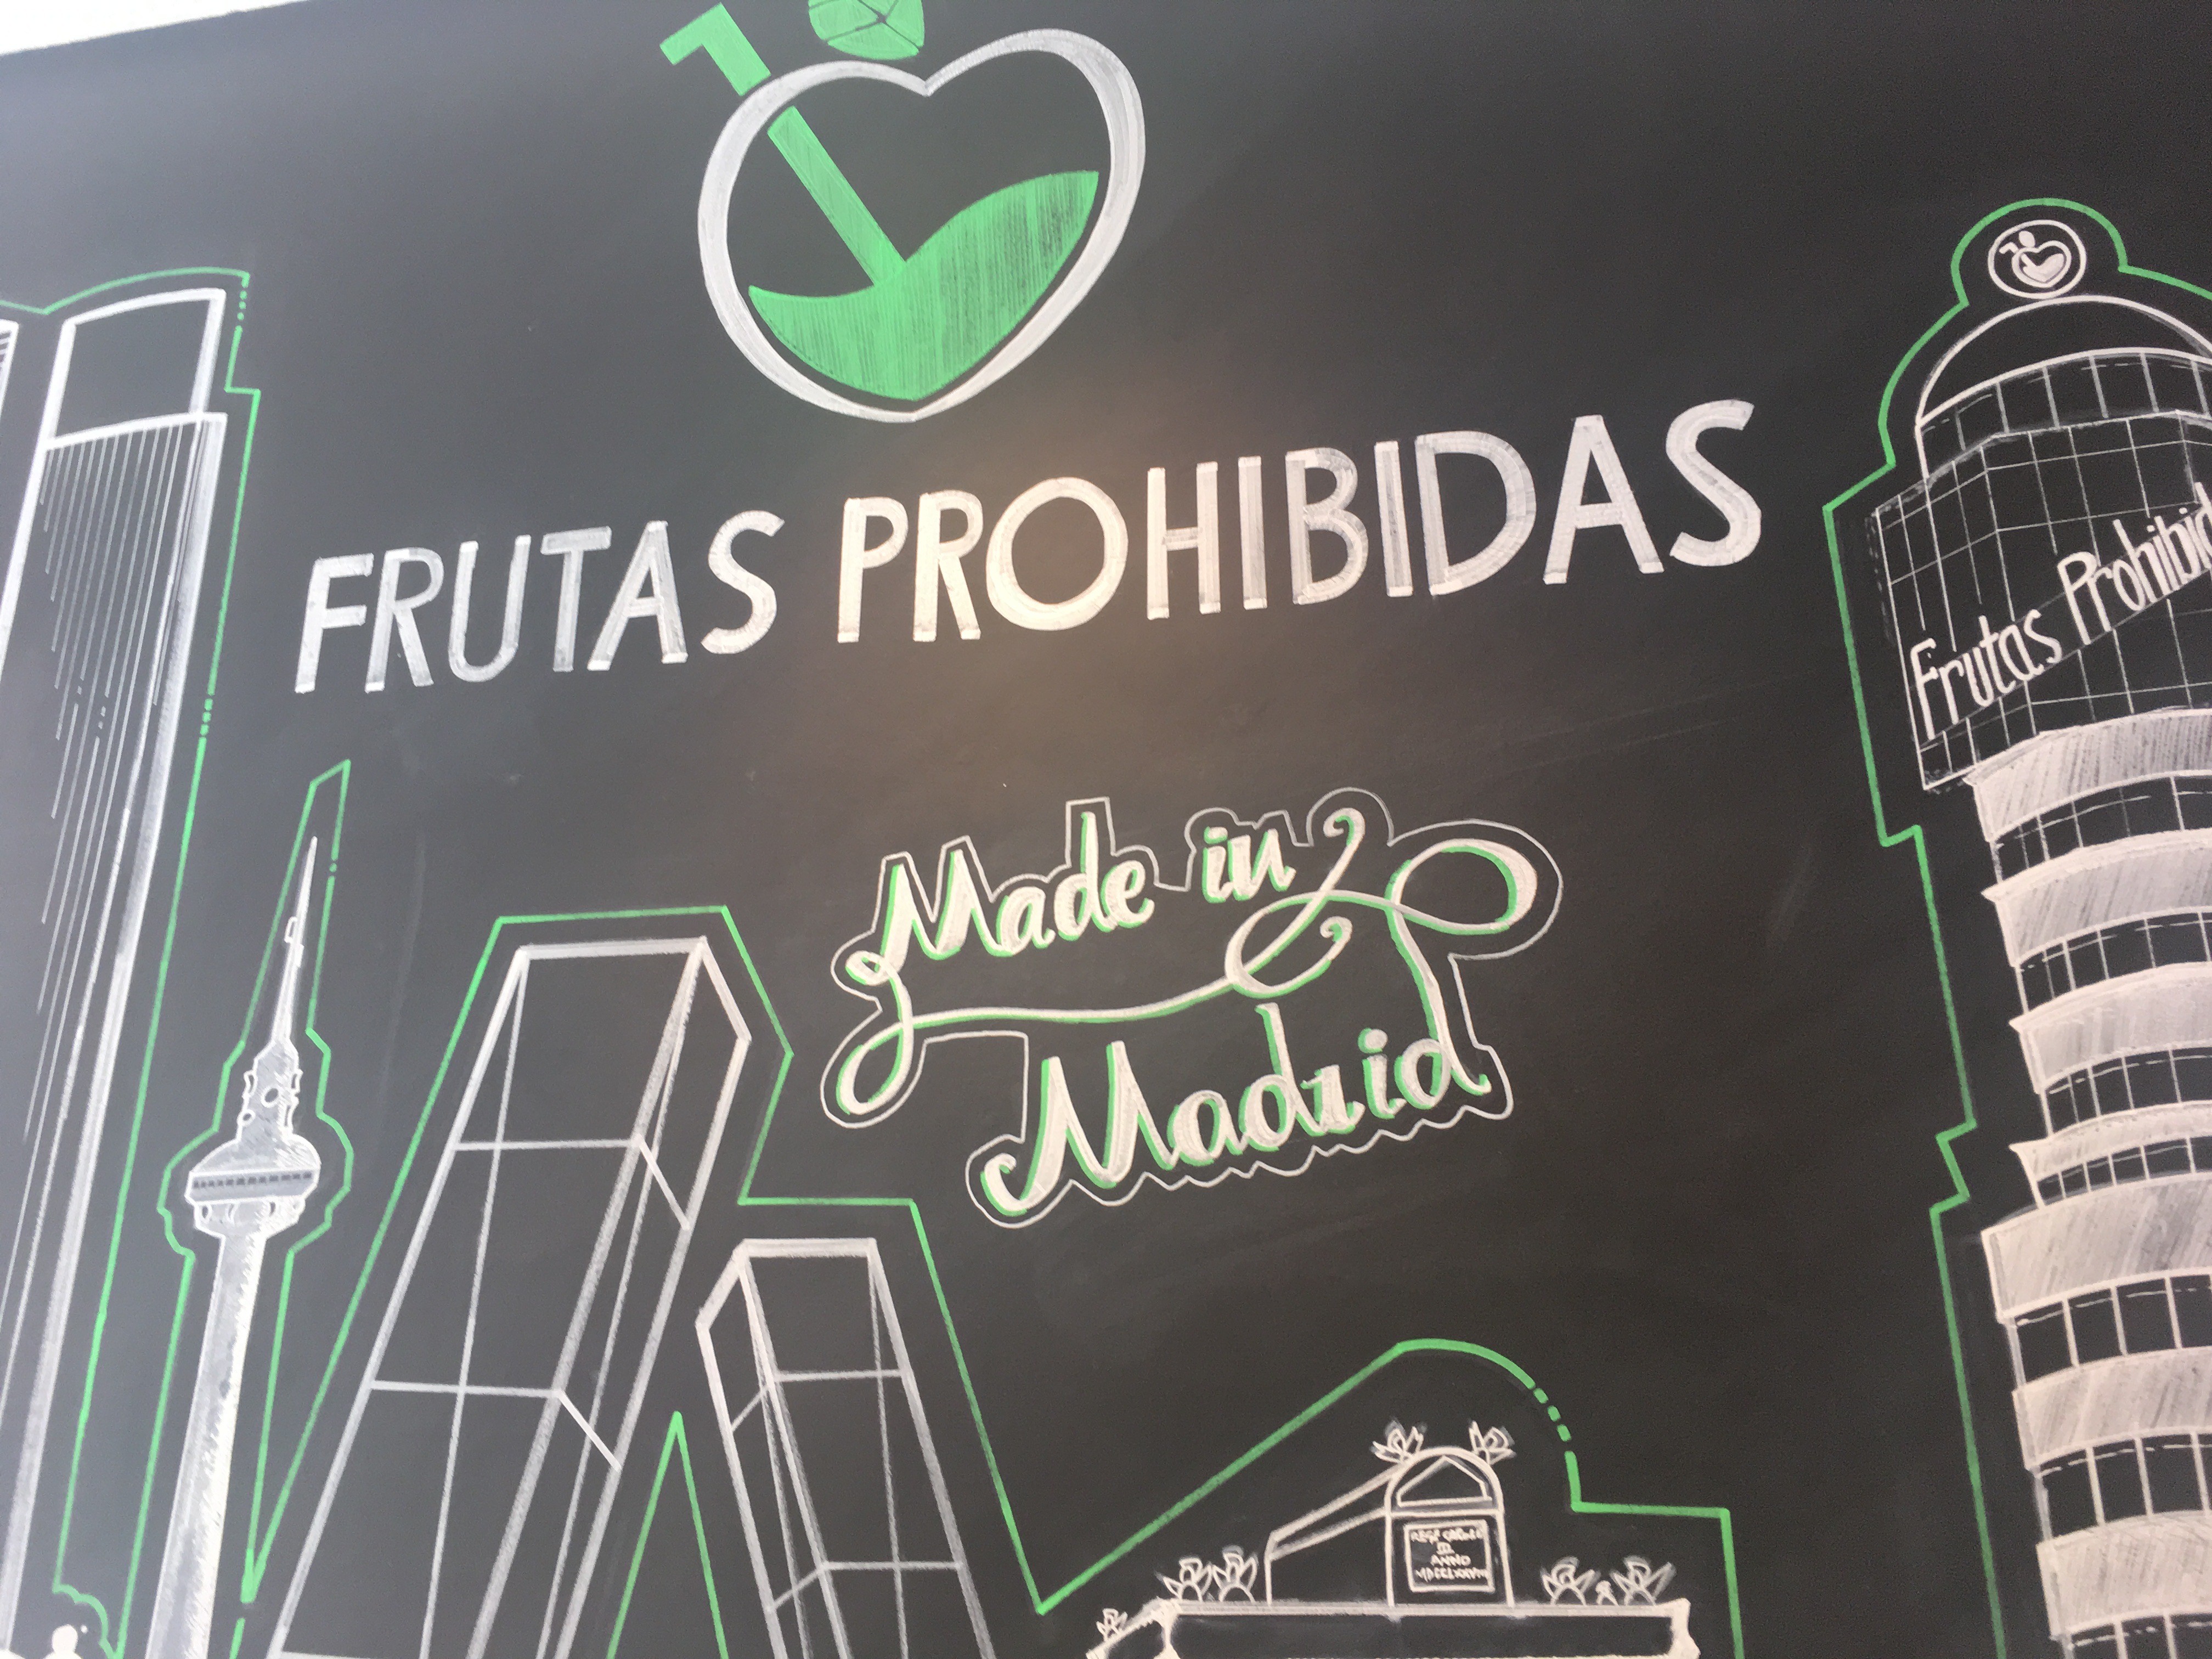 Frutas Prohibidas, Cafe, Madrid, Spain